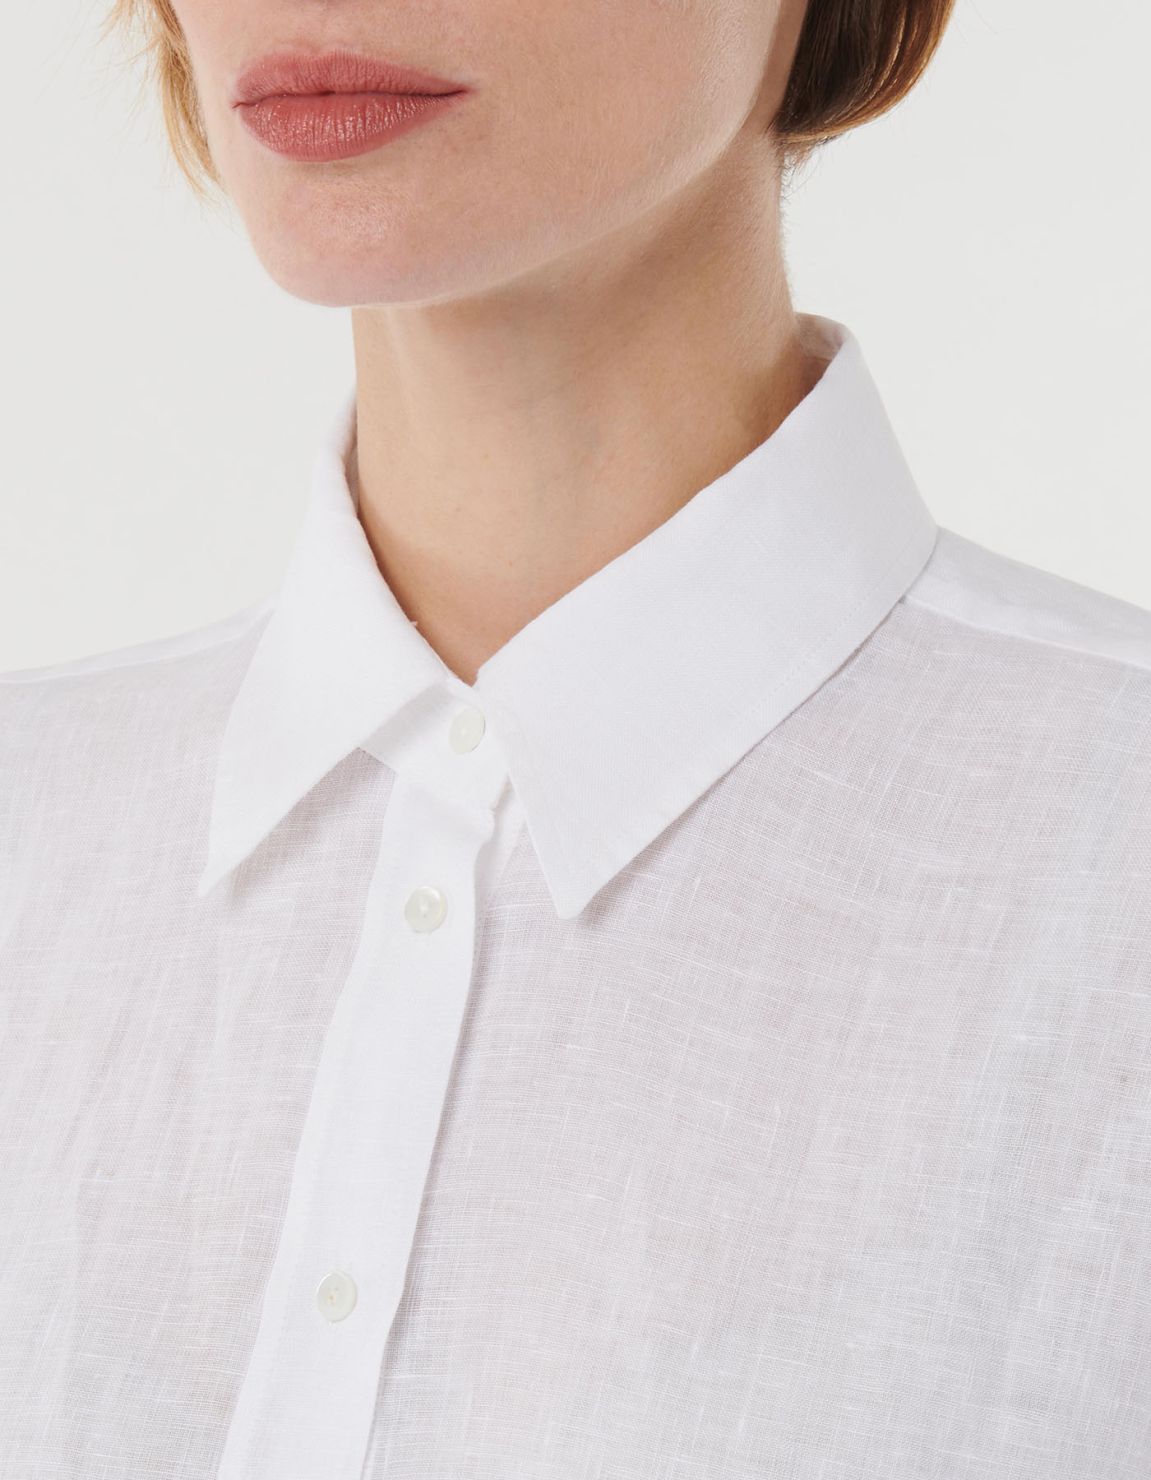 Shirt White Linen Solid colour Over 2